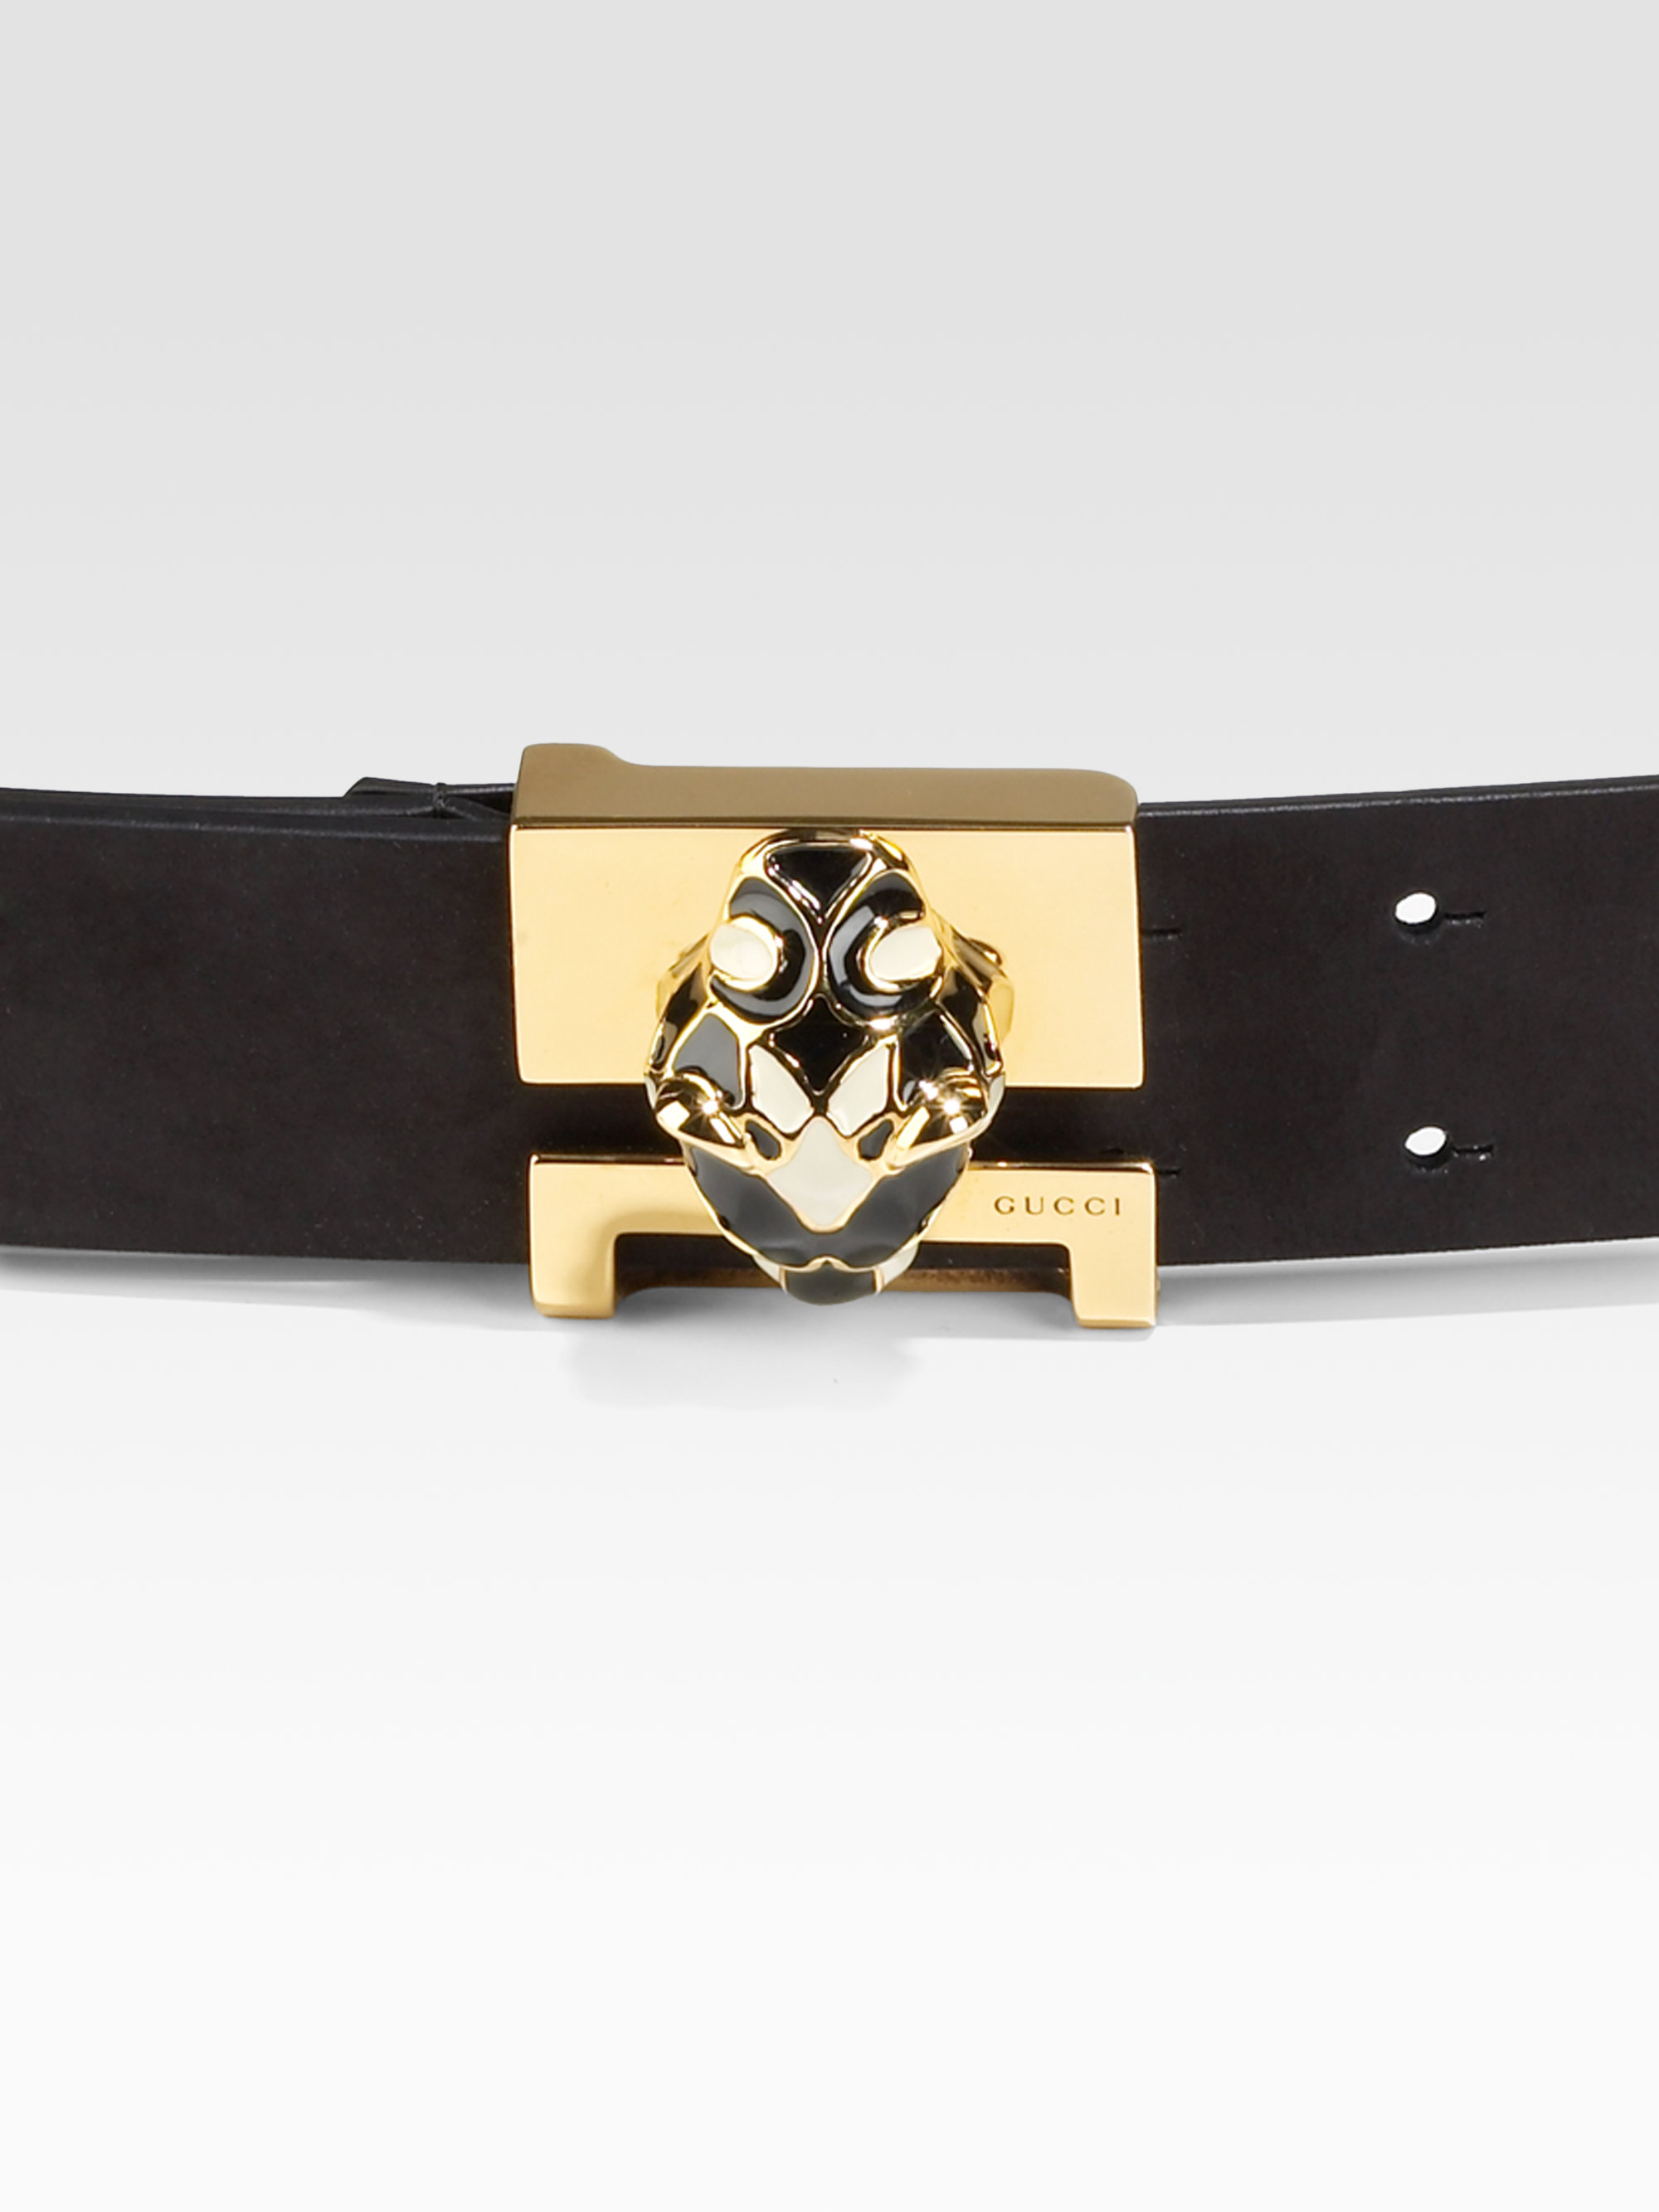 Lyst - Gucci Swarovoski Crystal Accented Enamel Tiger Leather Belt in Black